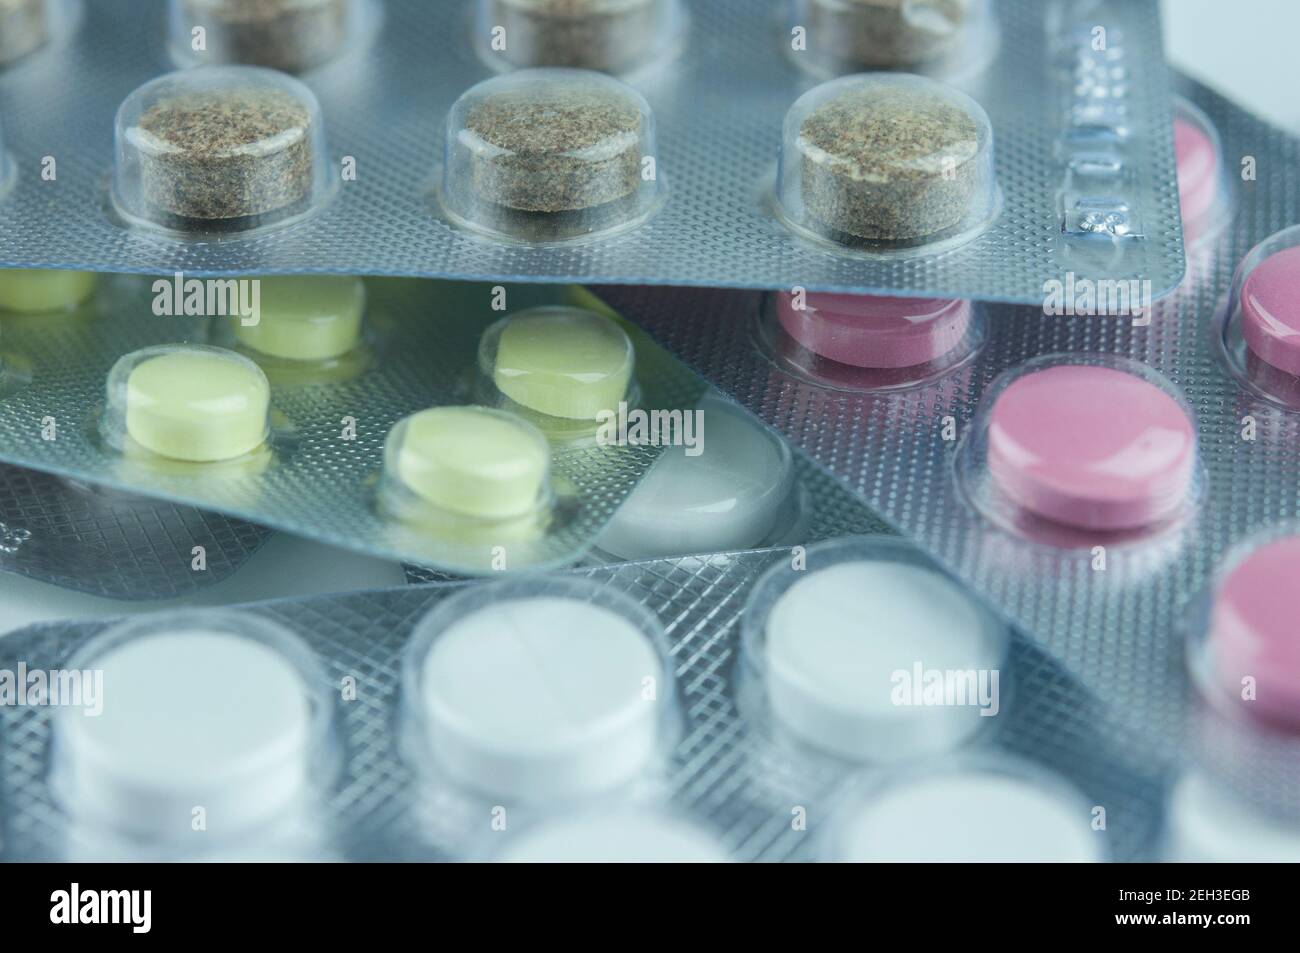 Bunte Tabletten und Kapseln Pillen in Blisterpackung. Pharmaindustrie.  Wechselwirkungen zwischen Medikamenten und Kräutern. Makroaufnahme.  Apotheke Drogerie Stockfotografie - Alamy